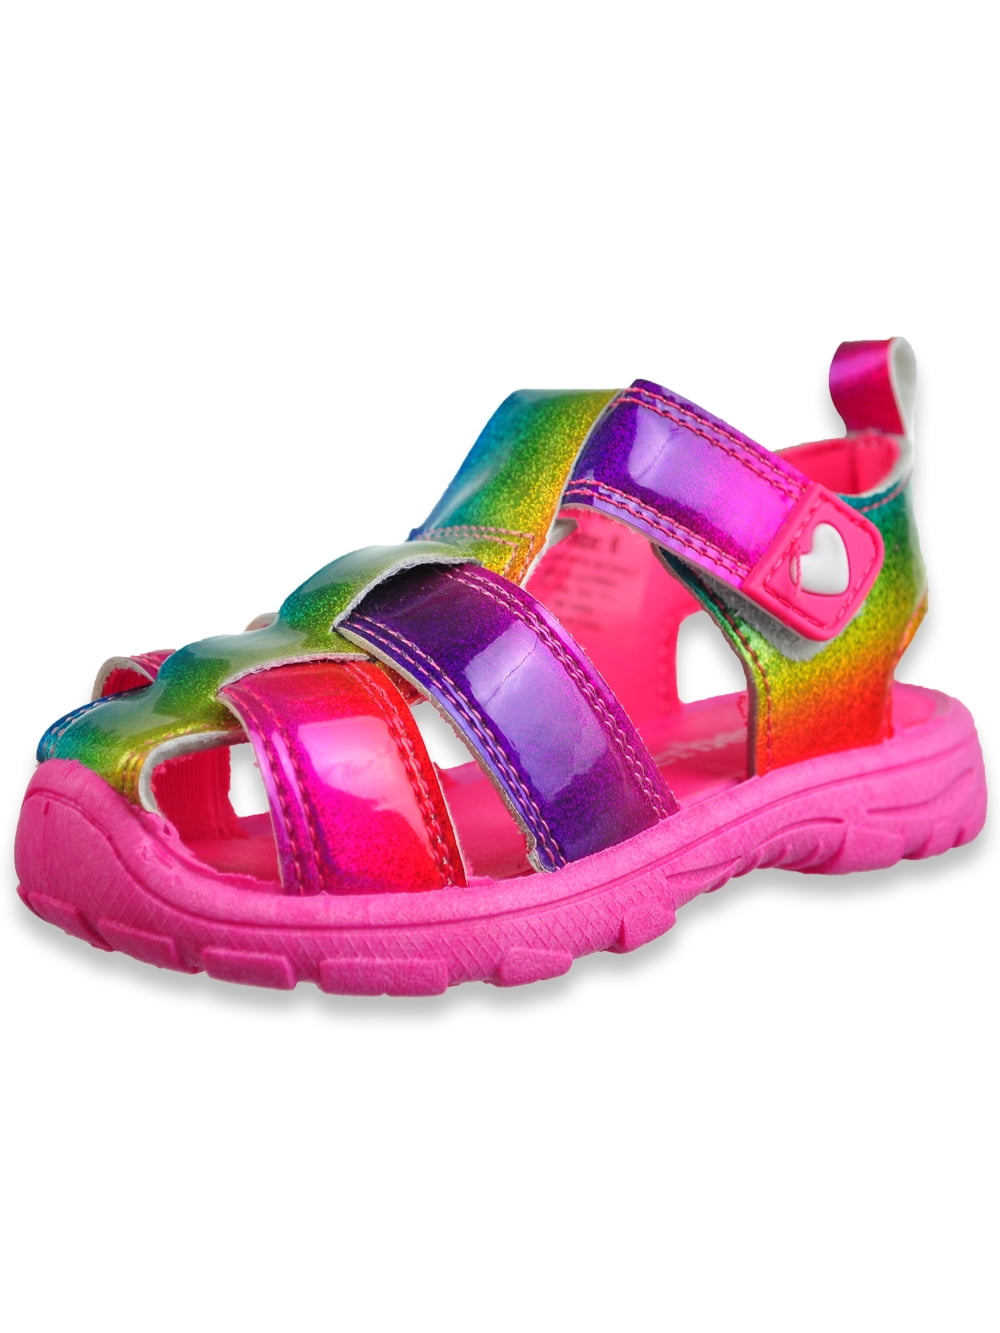 Kids Girls Frozen LED Sandal Flashing Light Up Sandbeach Sandal Glowing Shoes 